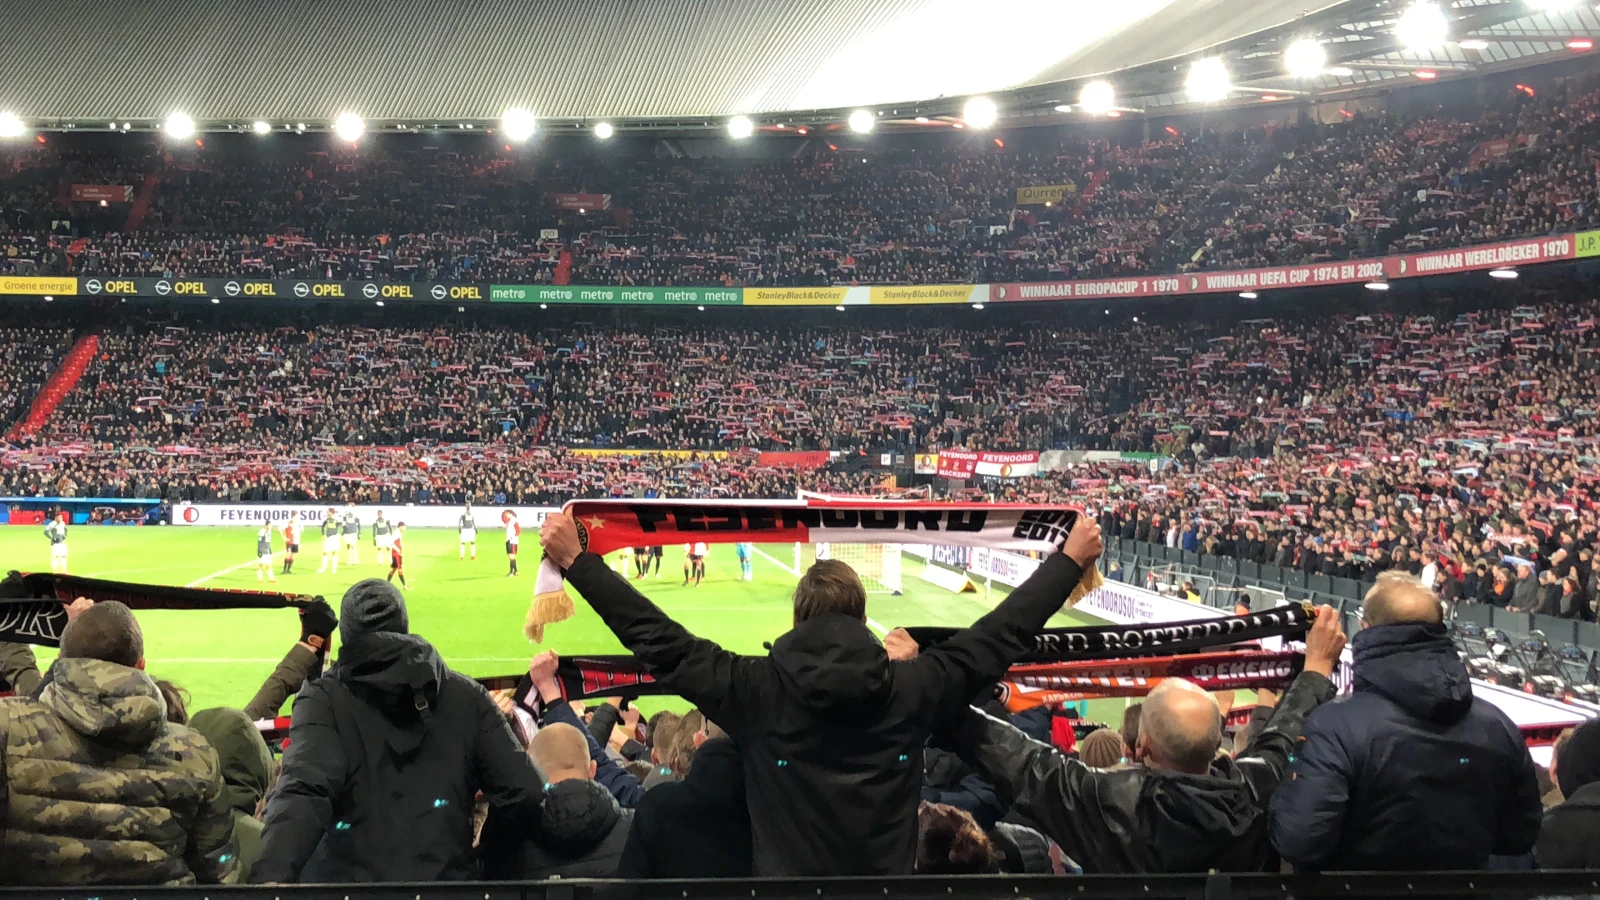 Beslissende wedstrijd tussen Feyenoord en Wolfsberger AC live te zien op 'open net'